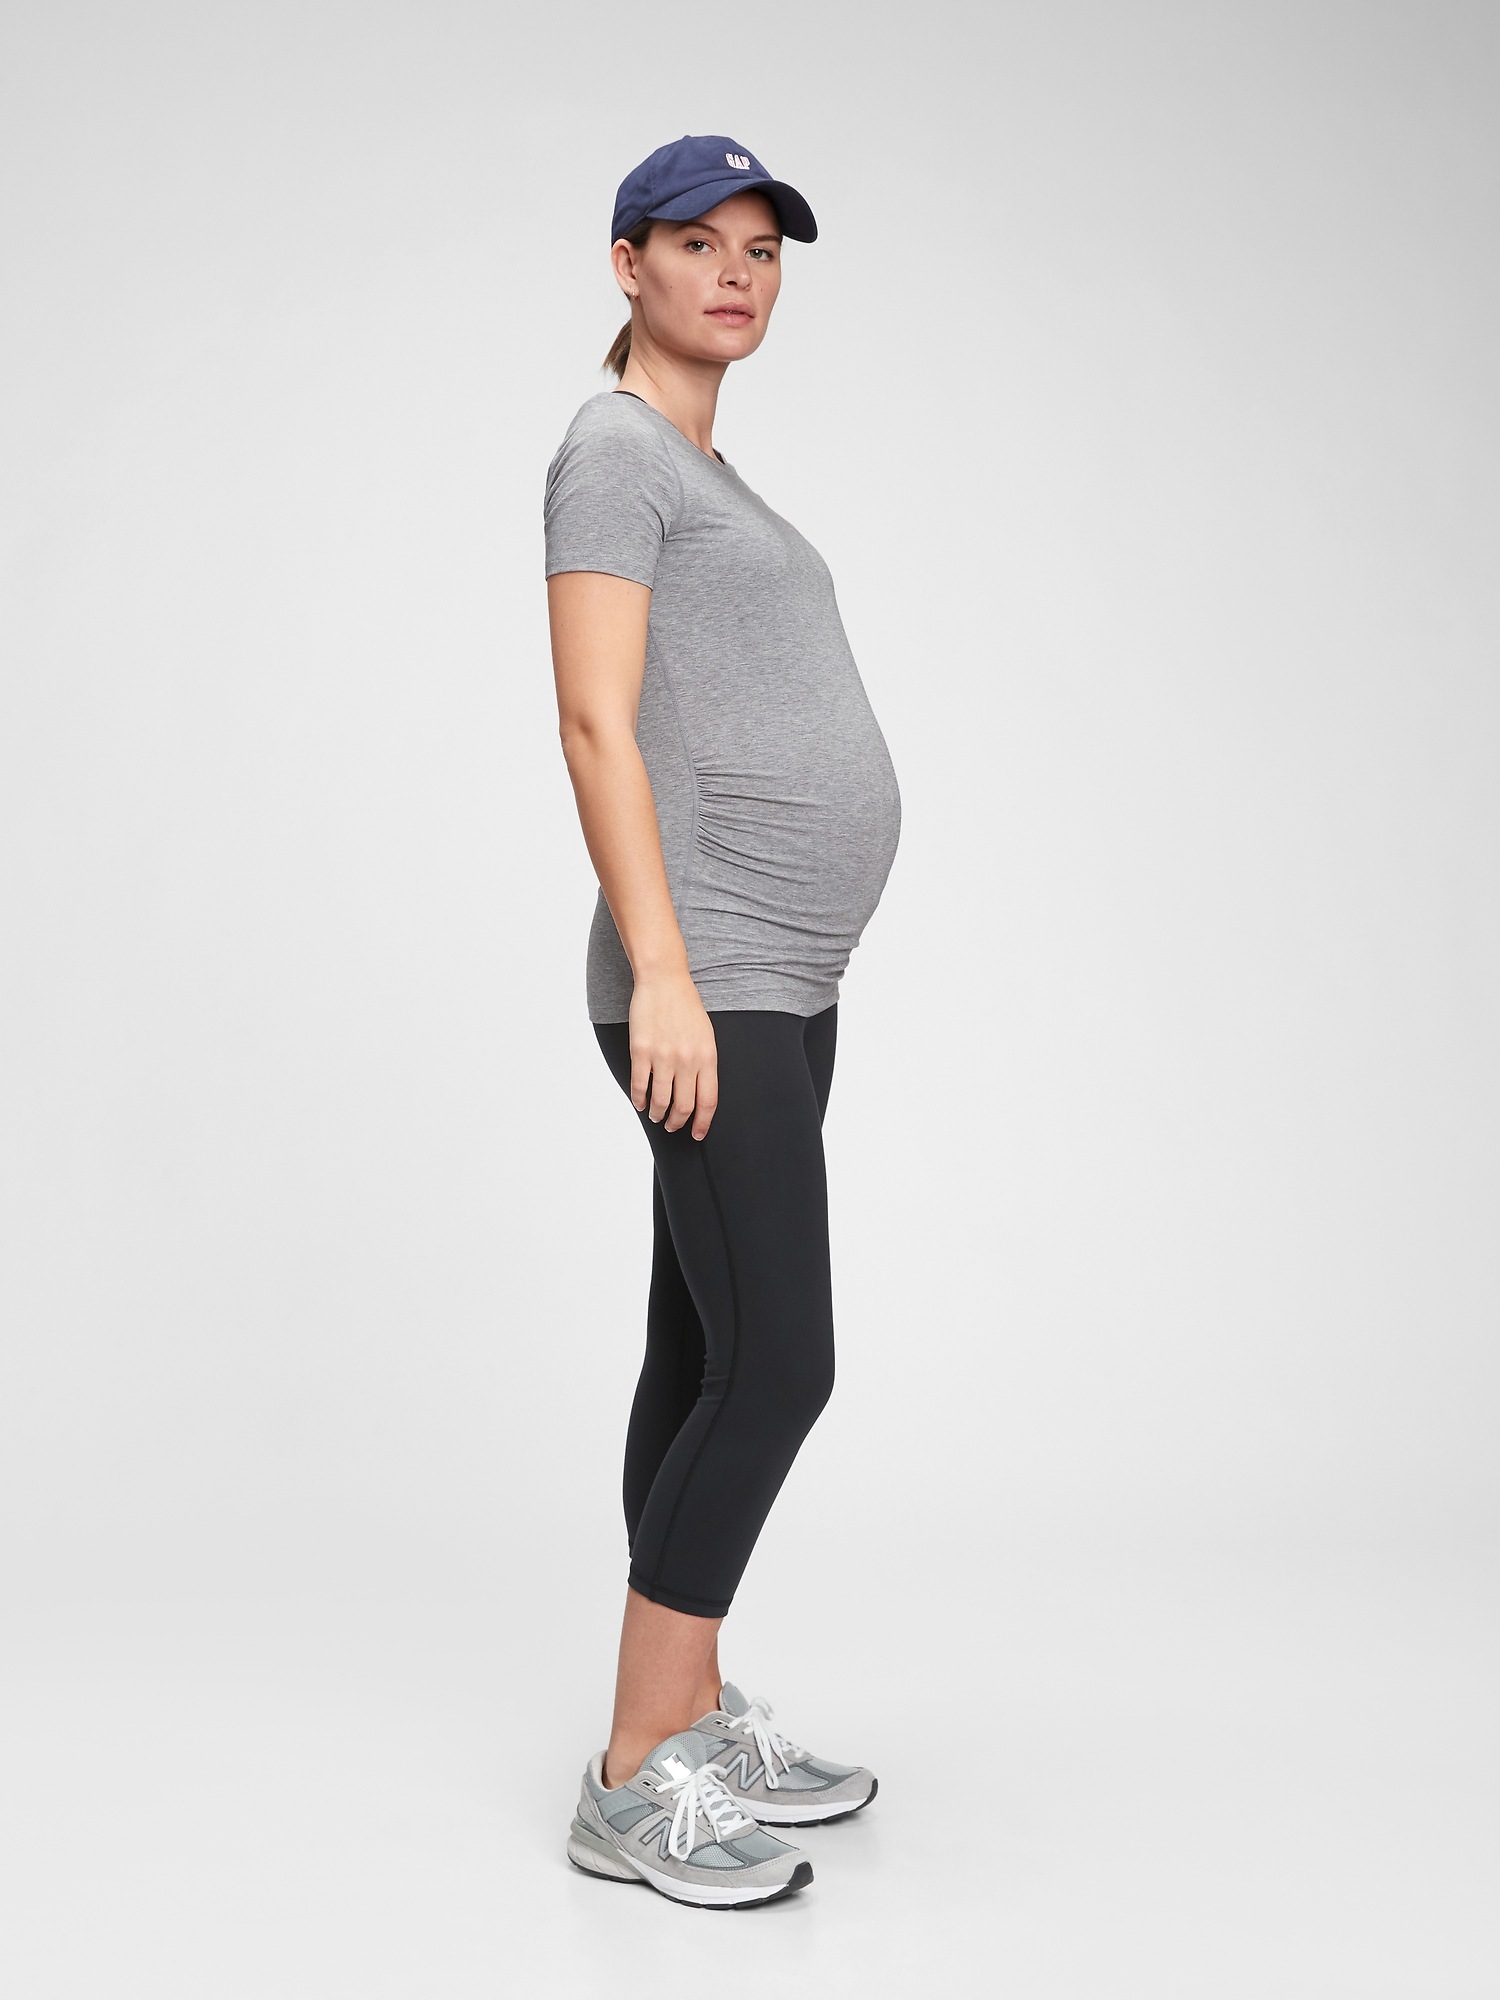 NWT*Gap Maternity Underbelly Capri Legging***Black**Size: Small (S)